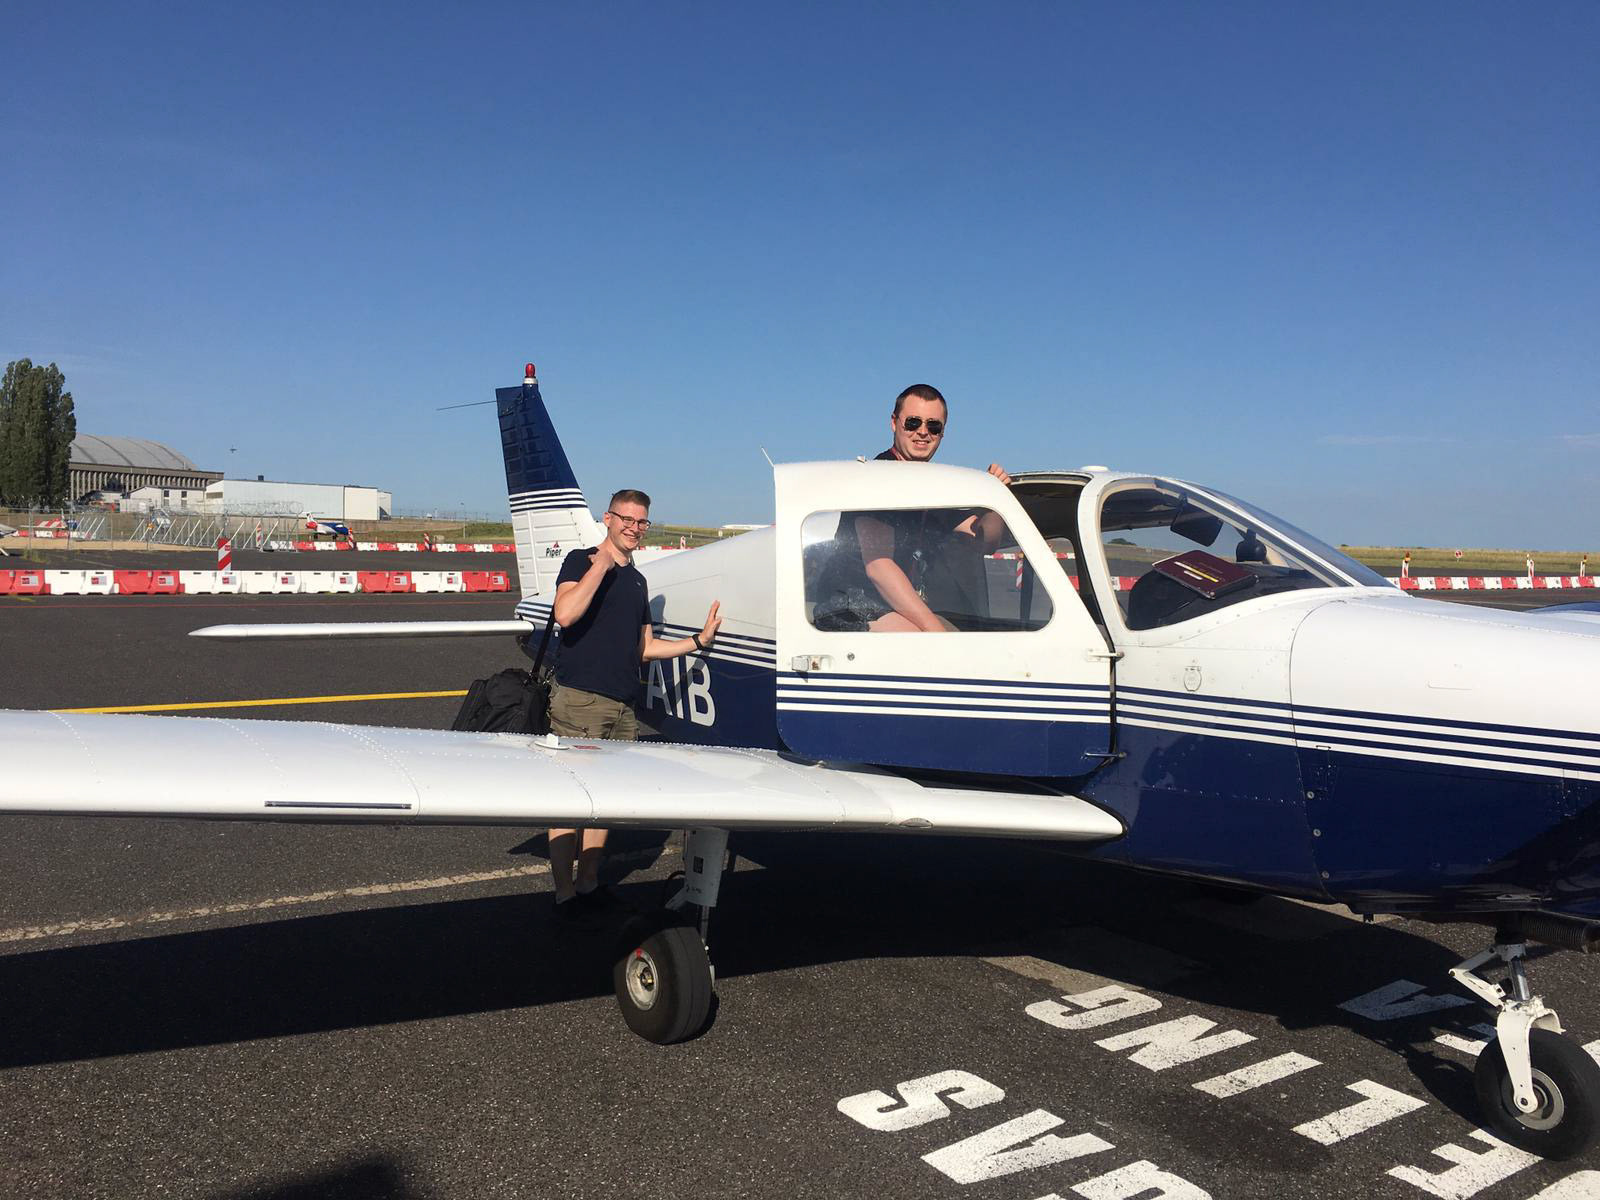 aeroArtistry - First flight as a licensed pilot